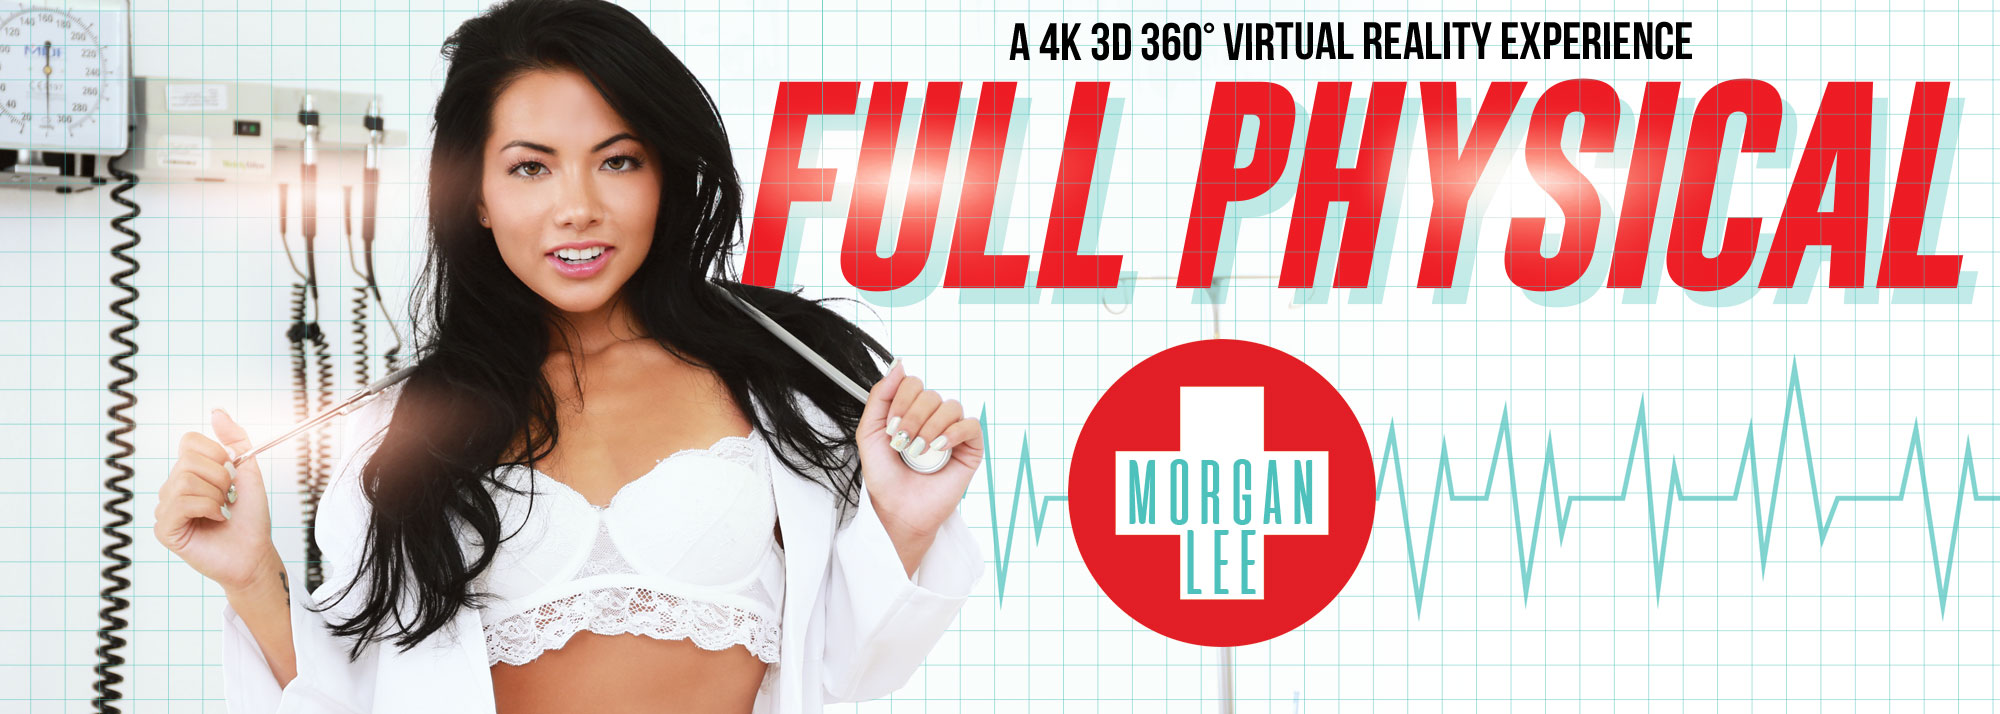 Full Physical - VR Porn Video, Starring: Morgan Lee